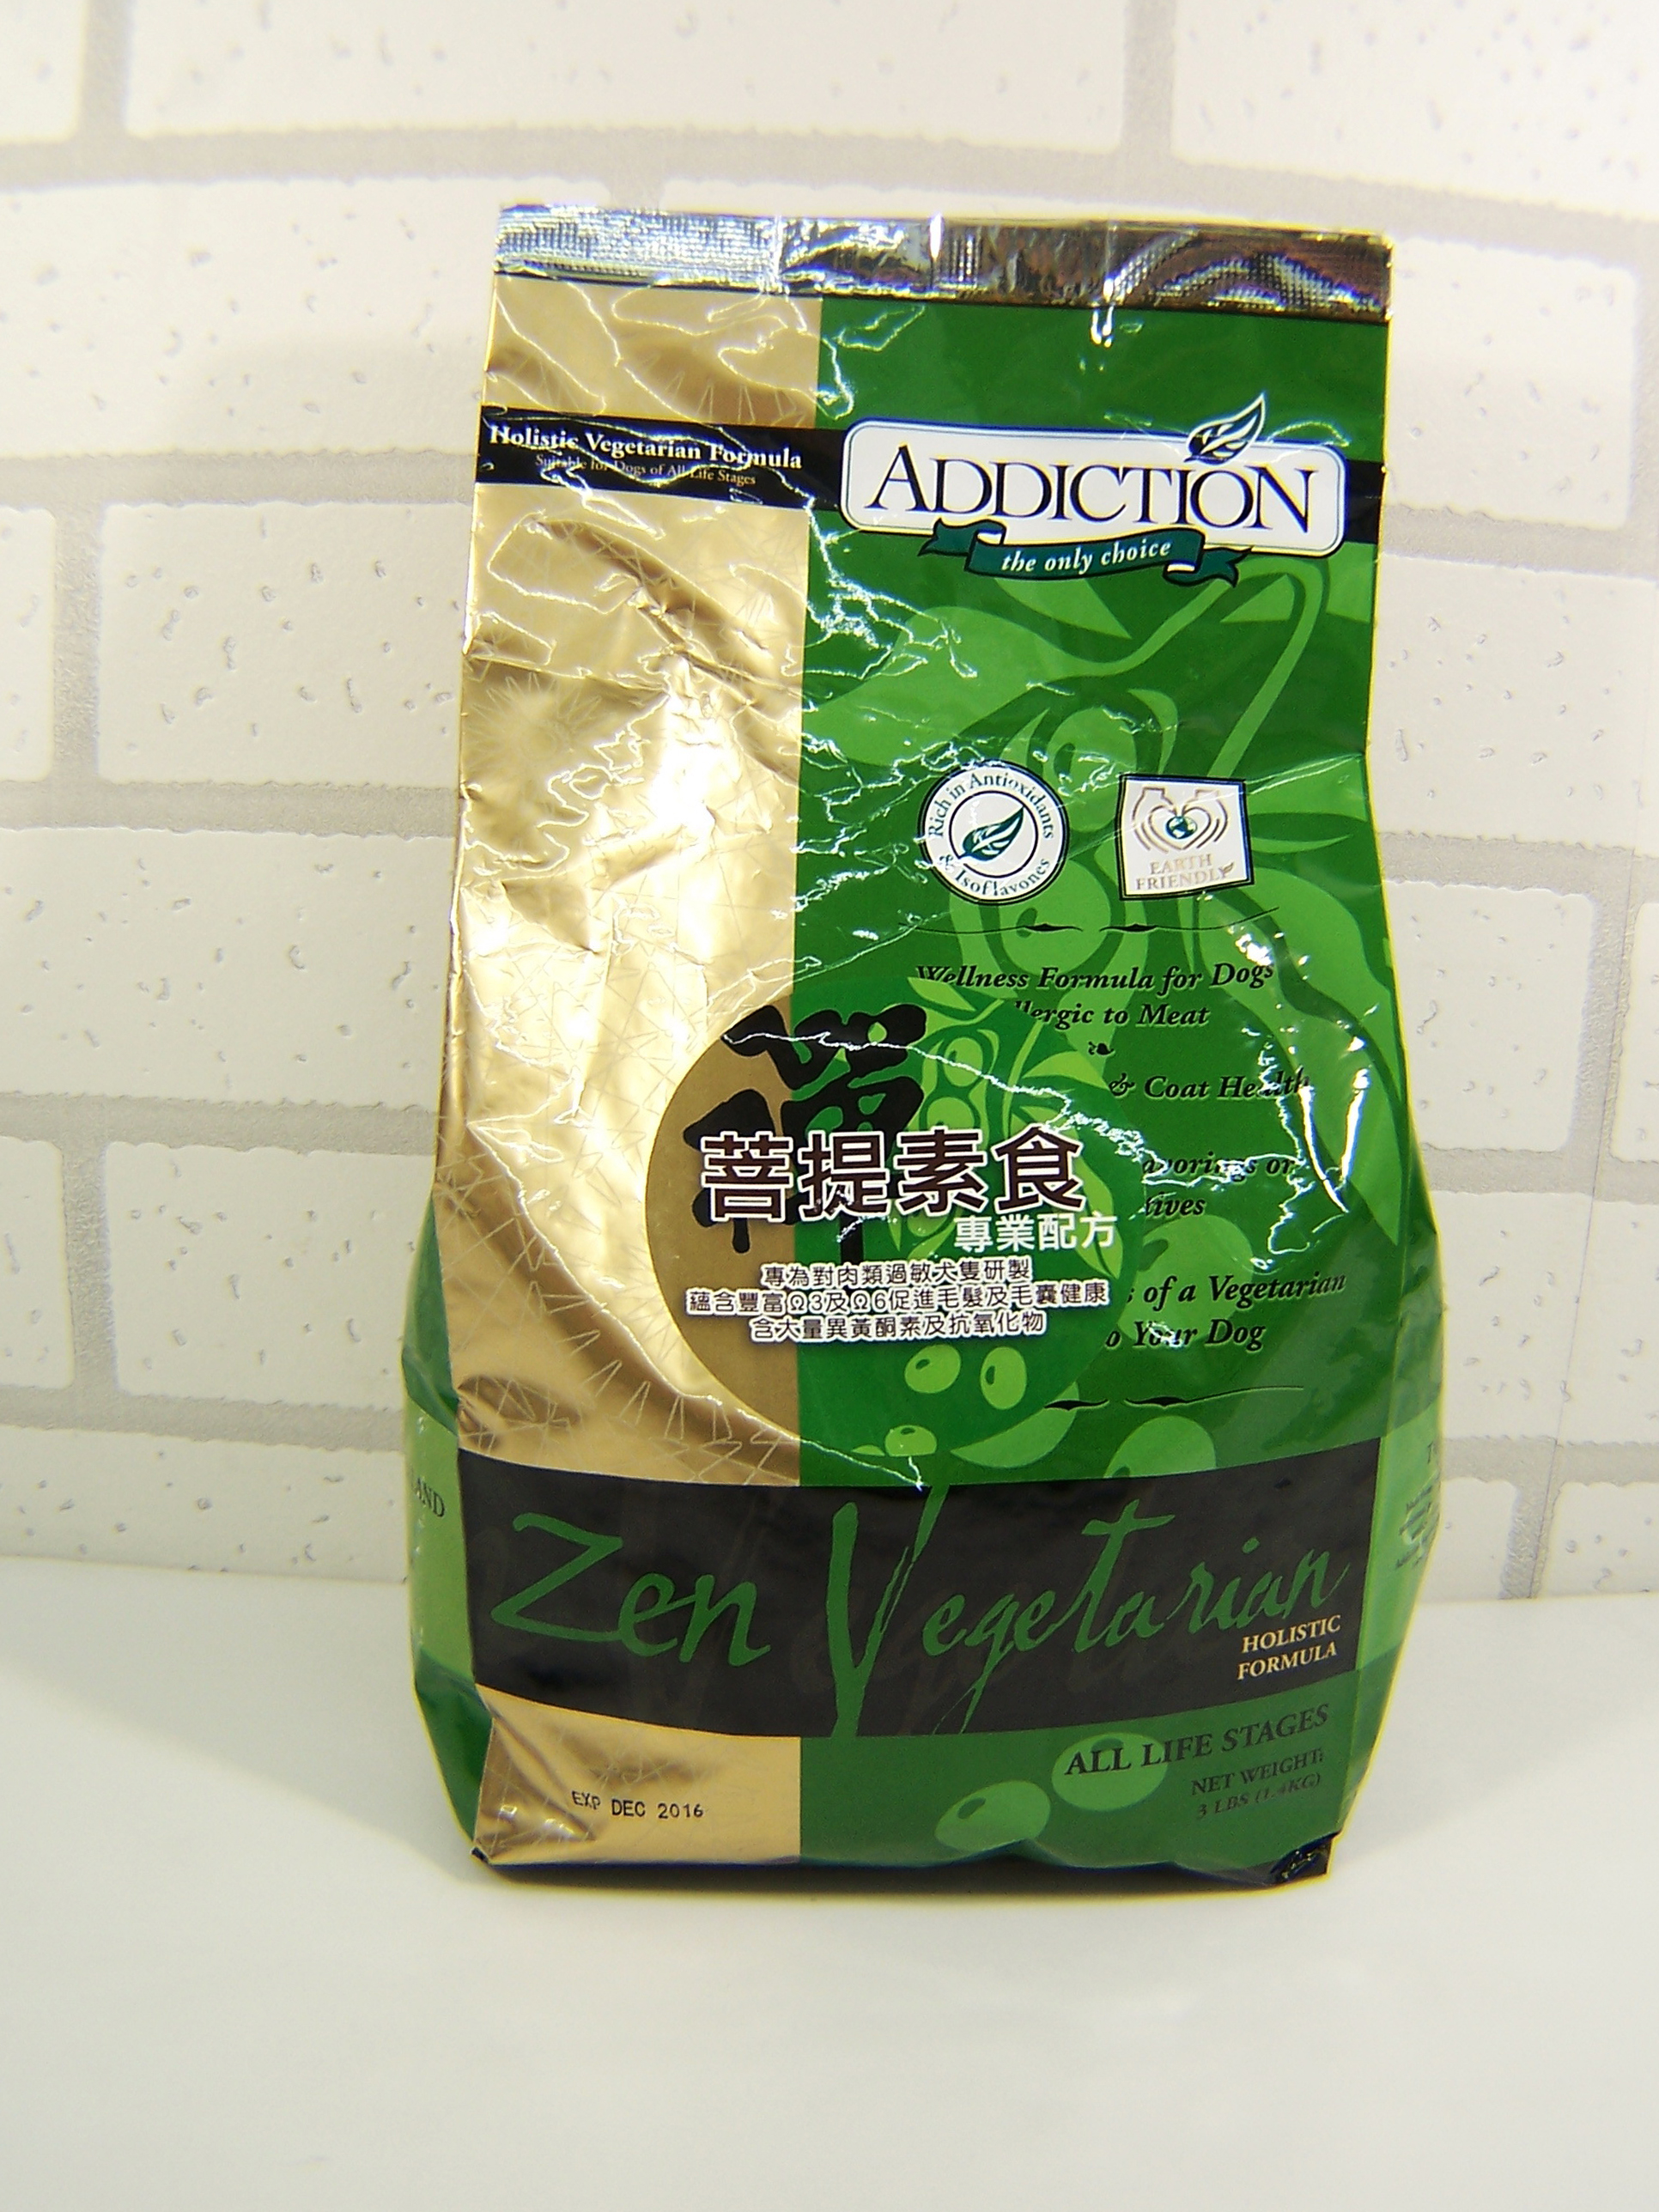 ADDICTION菩提素食 專業狗糧(3lbs/1.4kg)
Zen Vegetarian